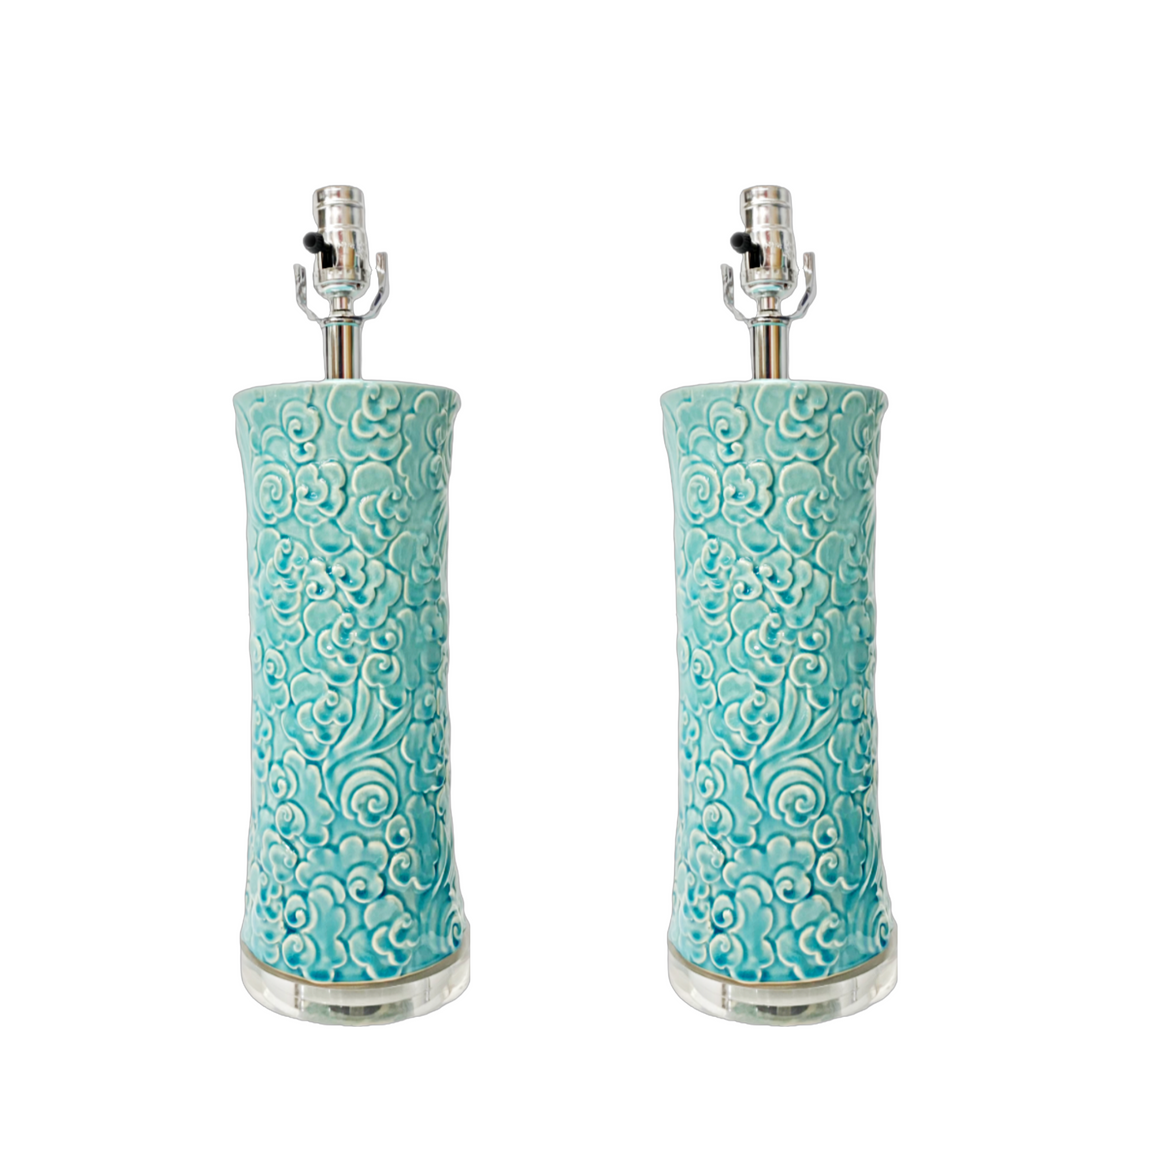 Pair of Turquoise Glazed Ceramic Lamps